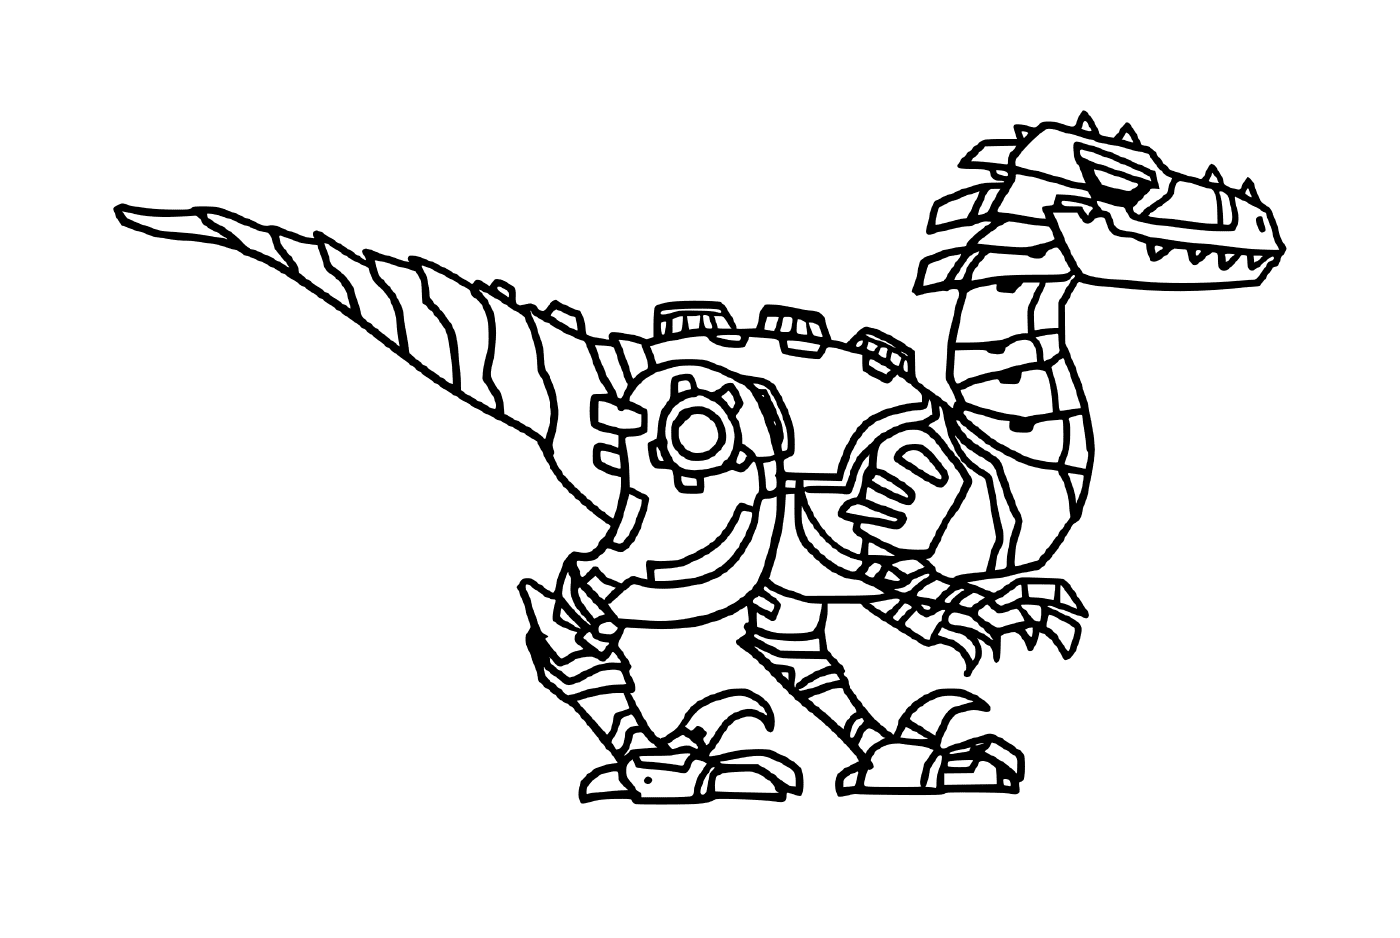  Tiranossauro, robô dinossauro 